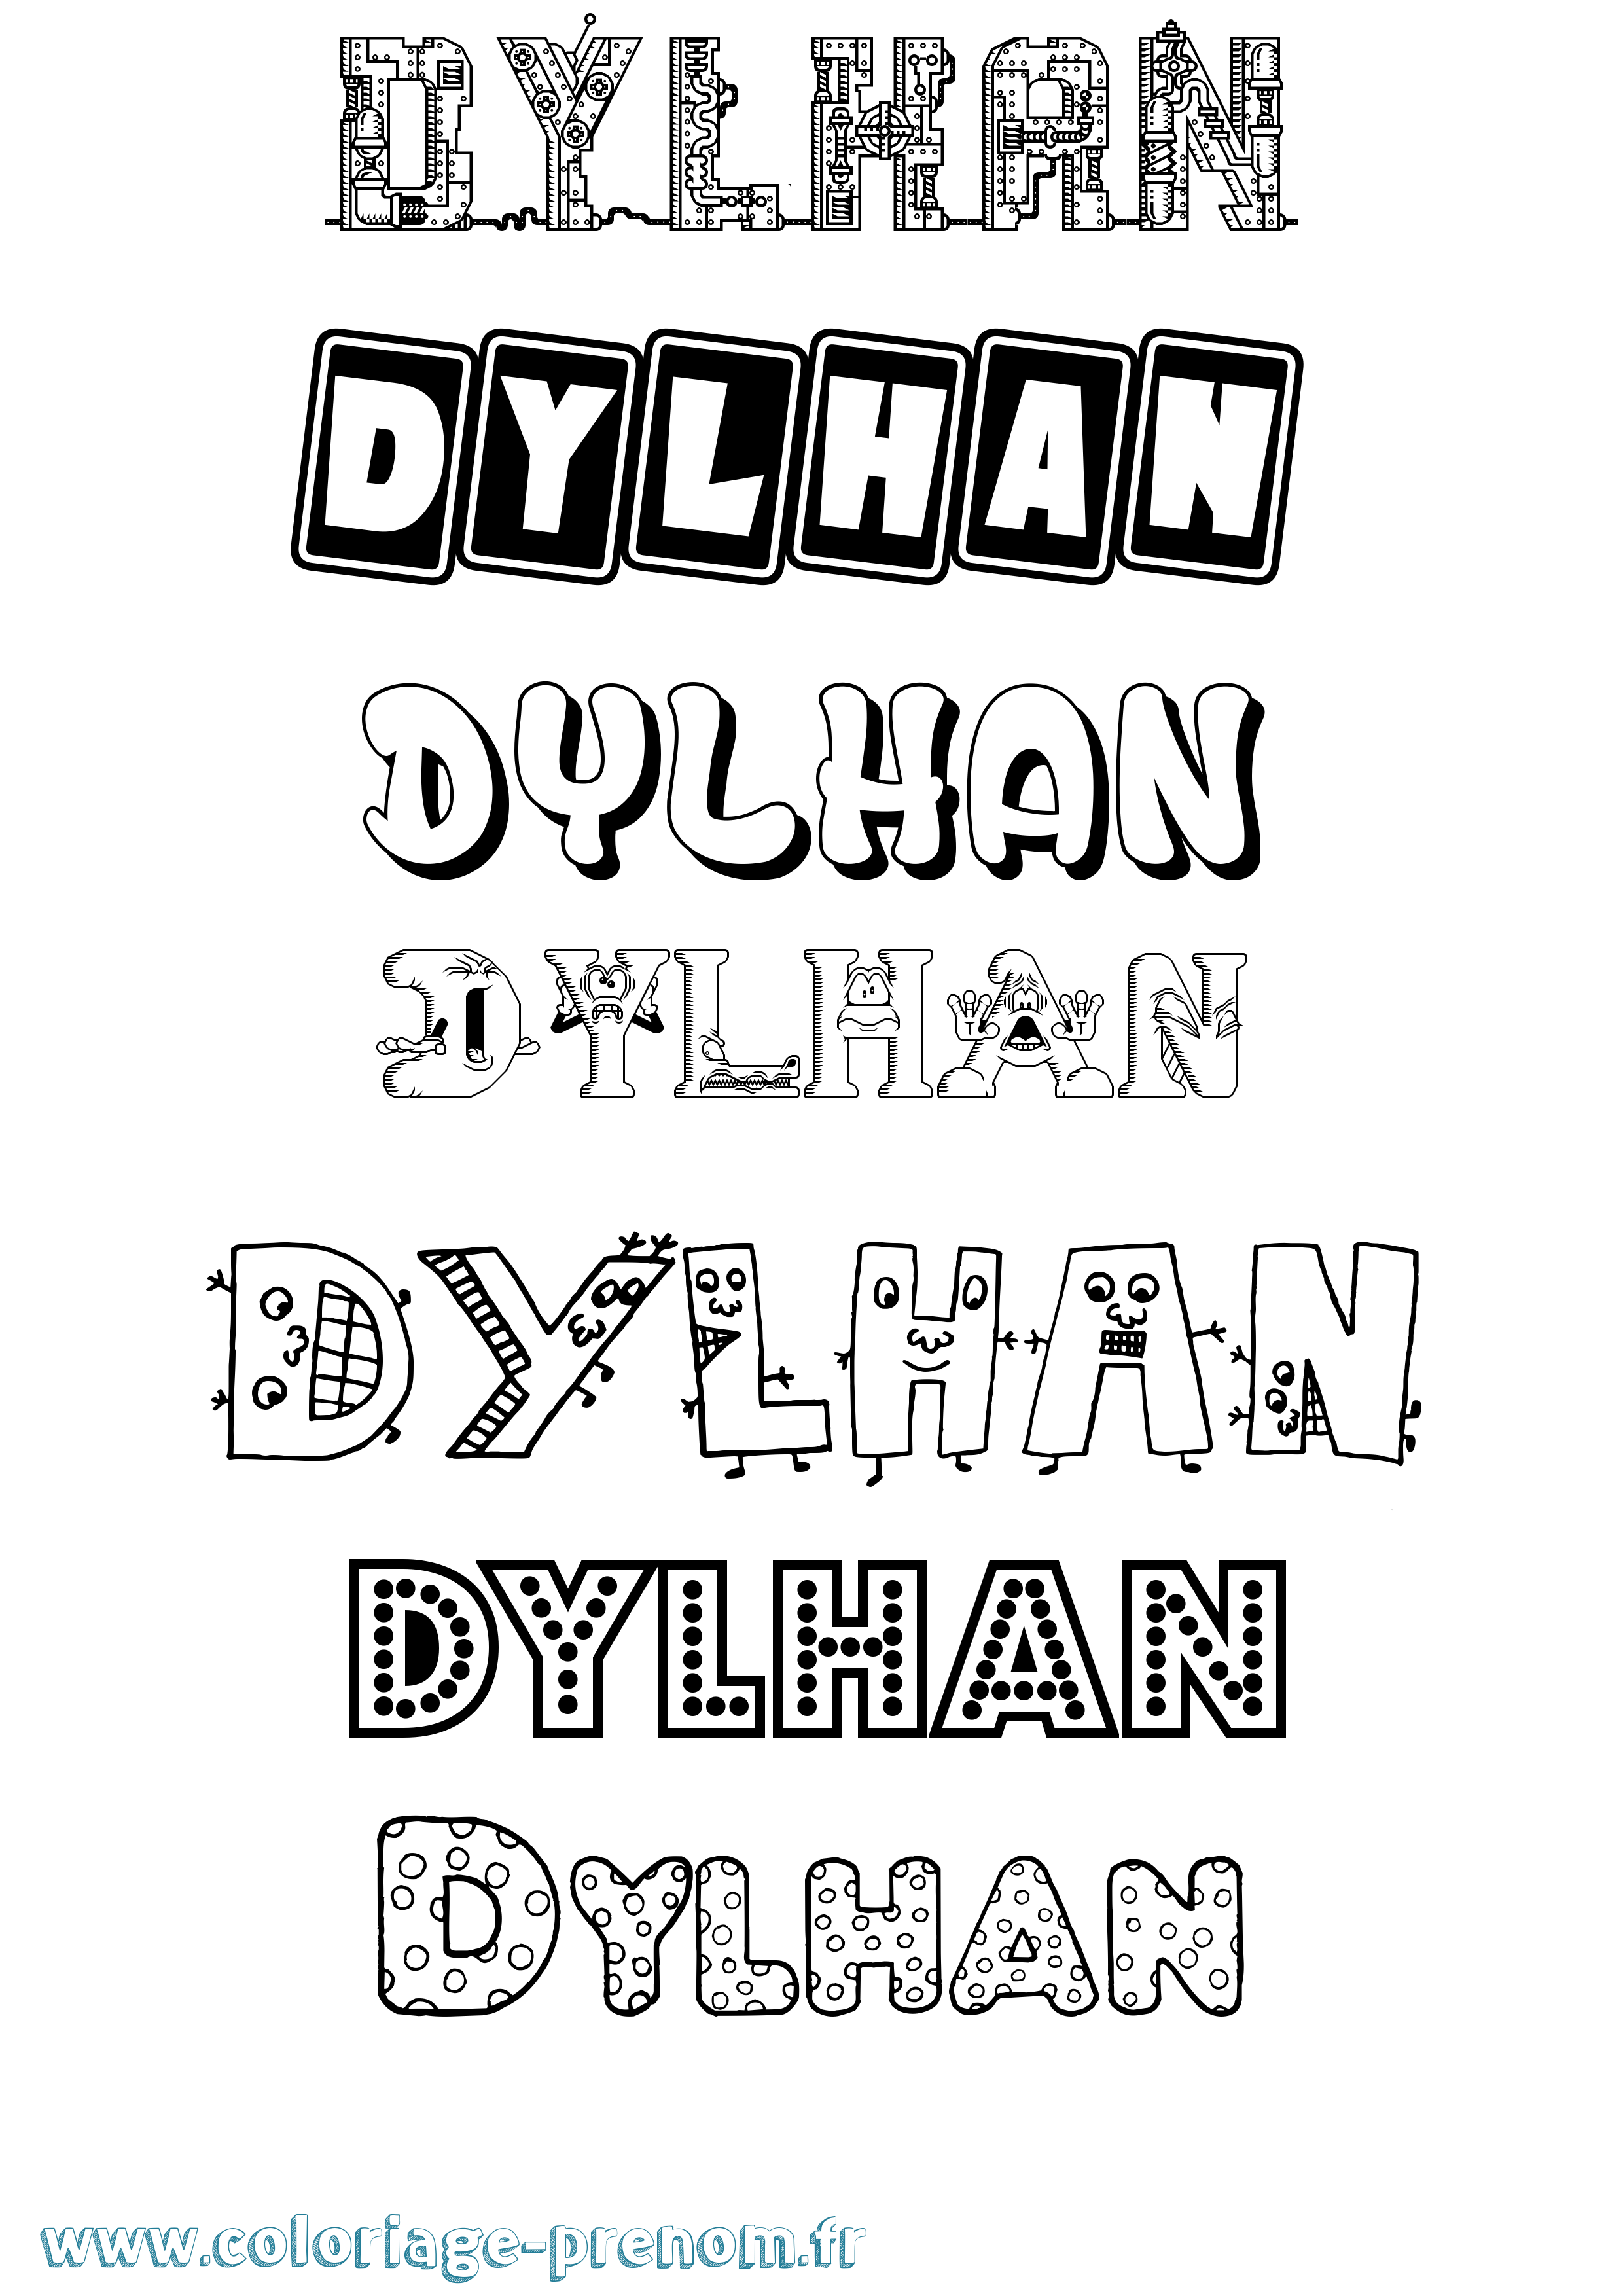 Coloriage prénom Dylhan Fun